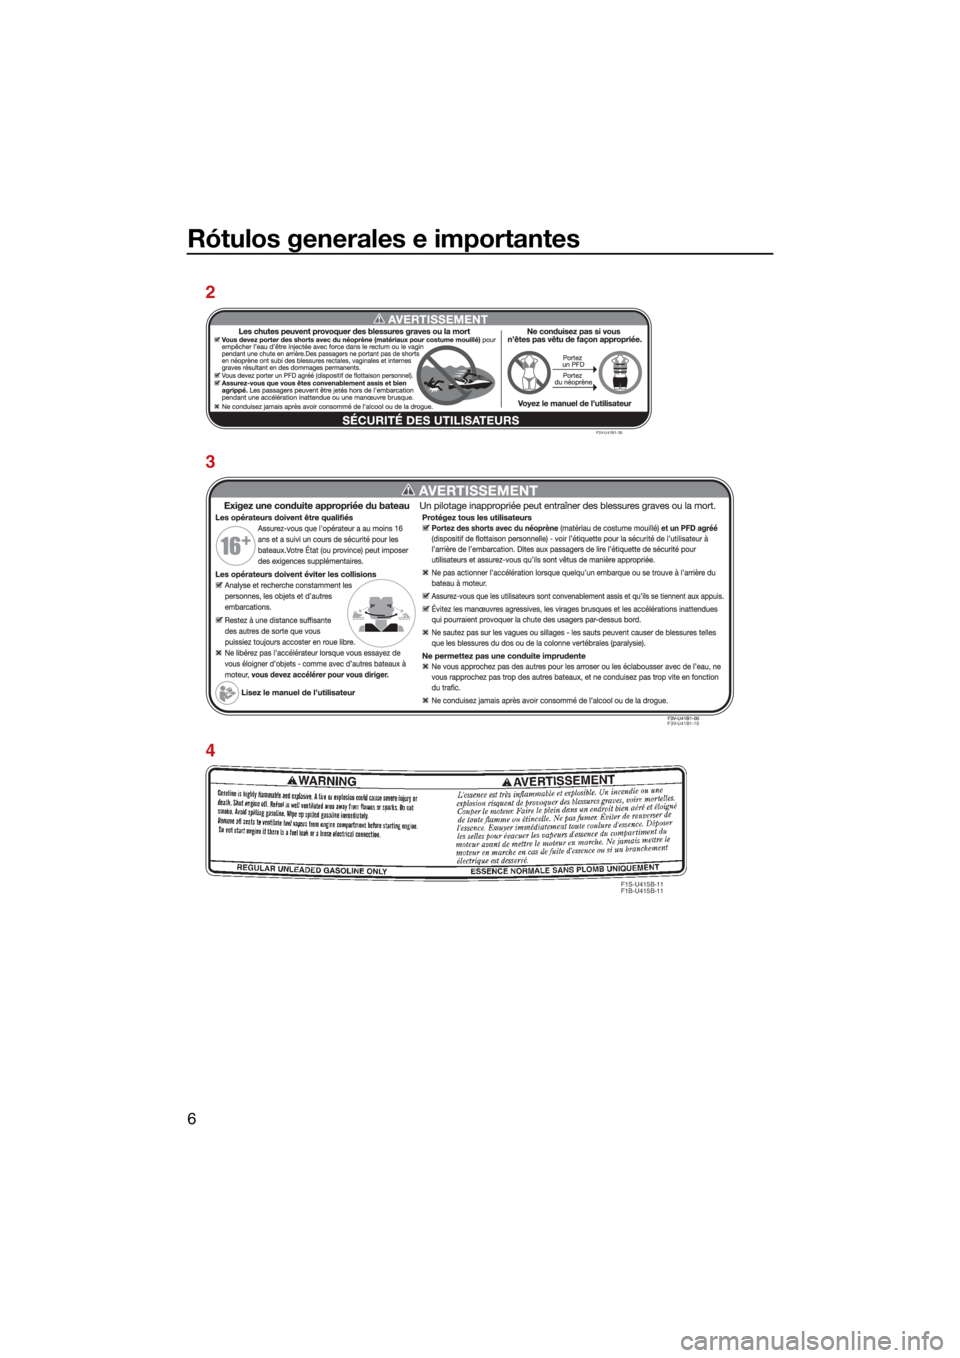 YAMAHA FX HO CRUISER 2021  Manuale de Empleo (in Spanish) Rótulos generales e importantes
6
F1S-U415B-11
F1B-U415B-11
2
3
4
F3V-U41B1-30
F3V-U41B1-10
UF3V72S0.book  Page 6  Tuesday, June 16, 2020  11:25 AM 